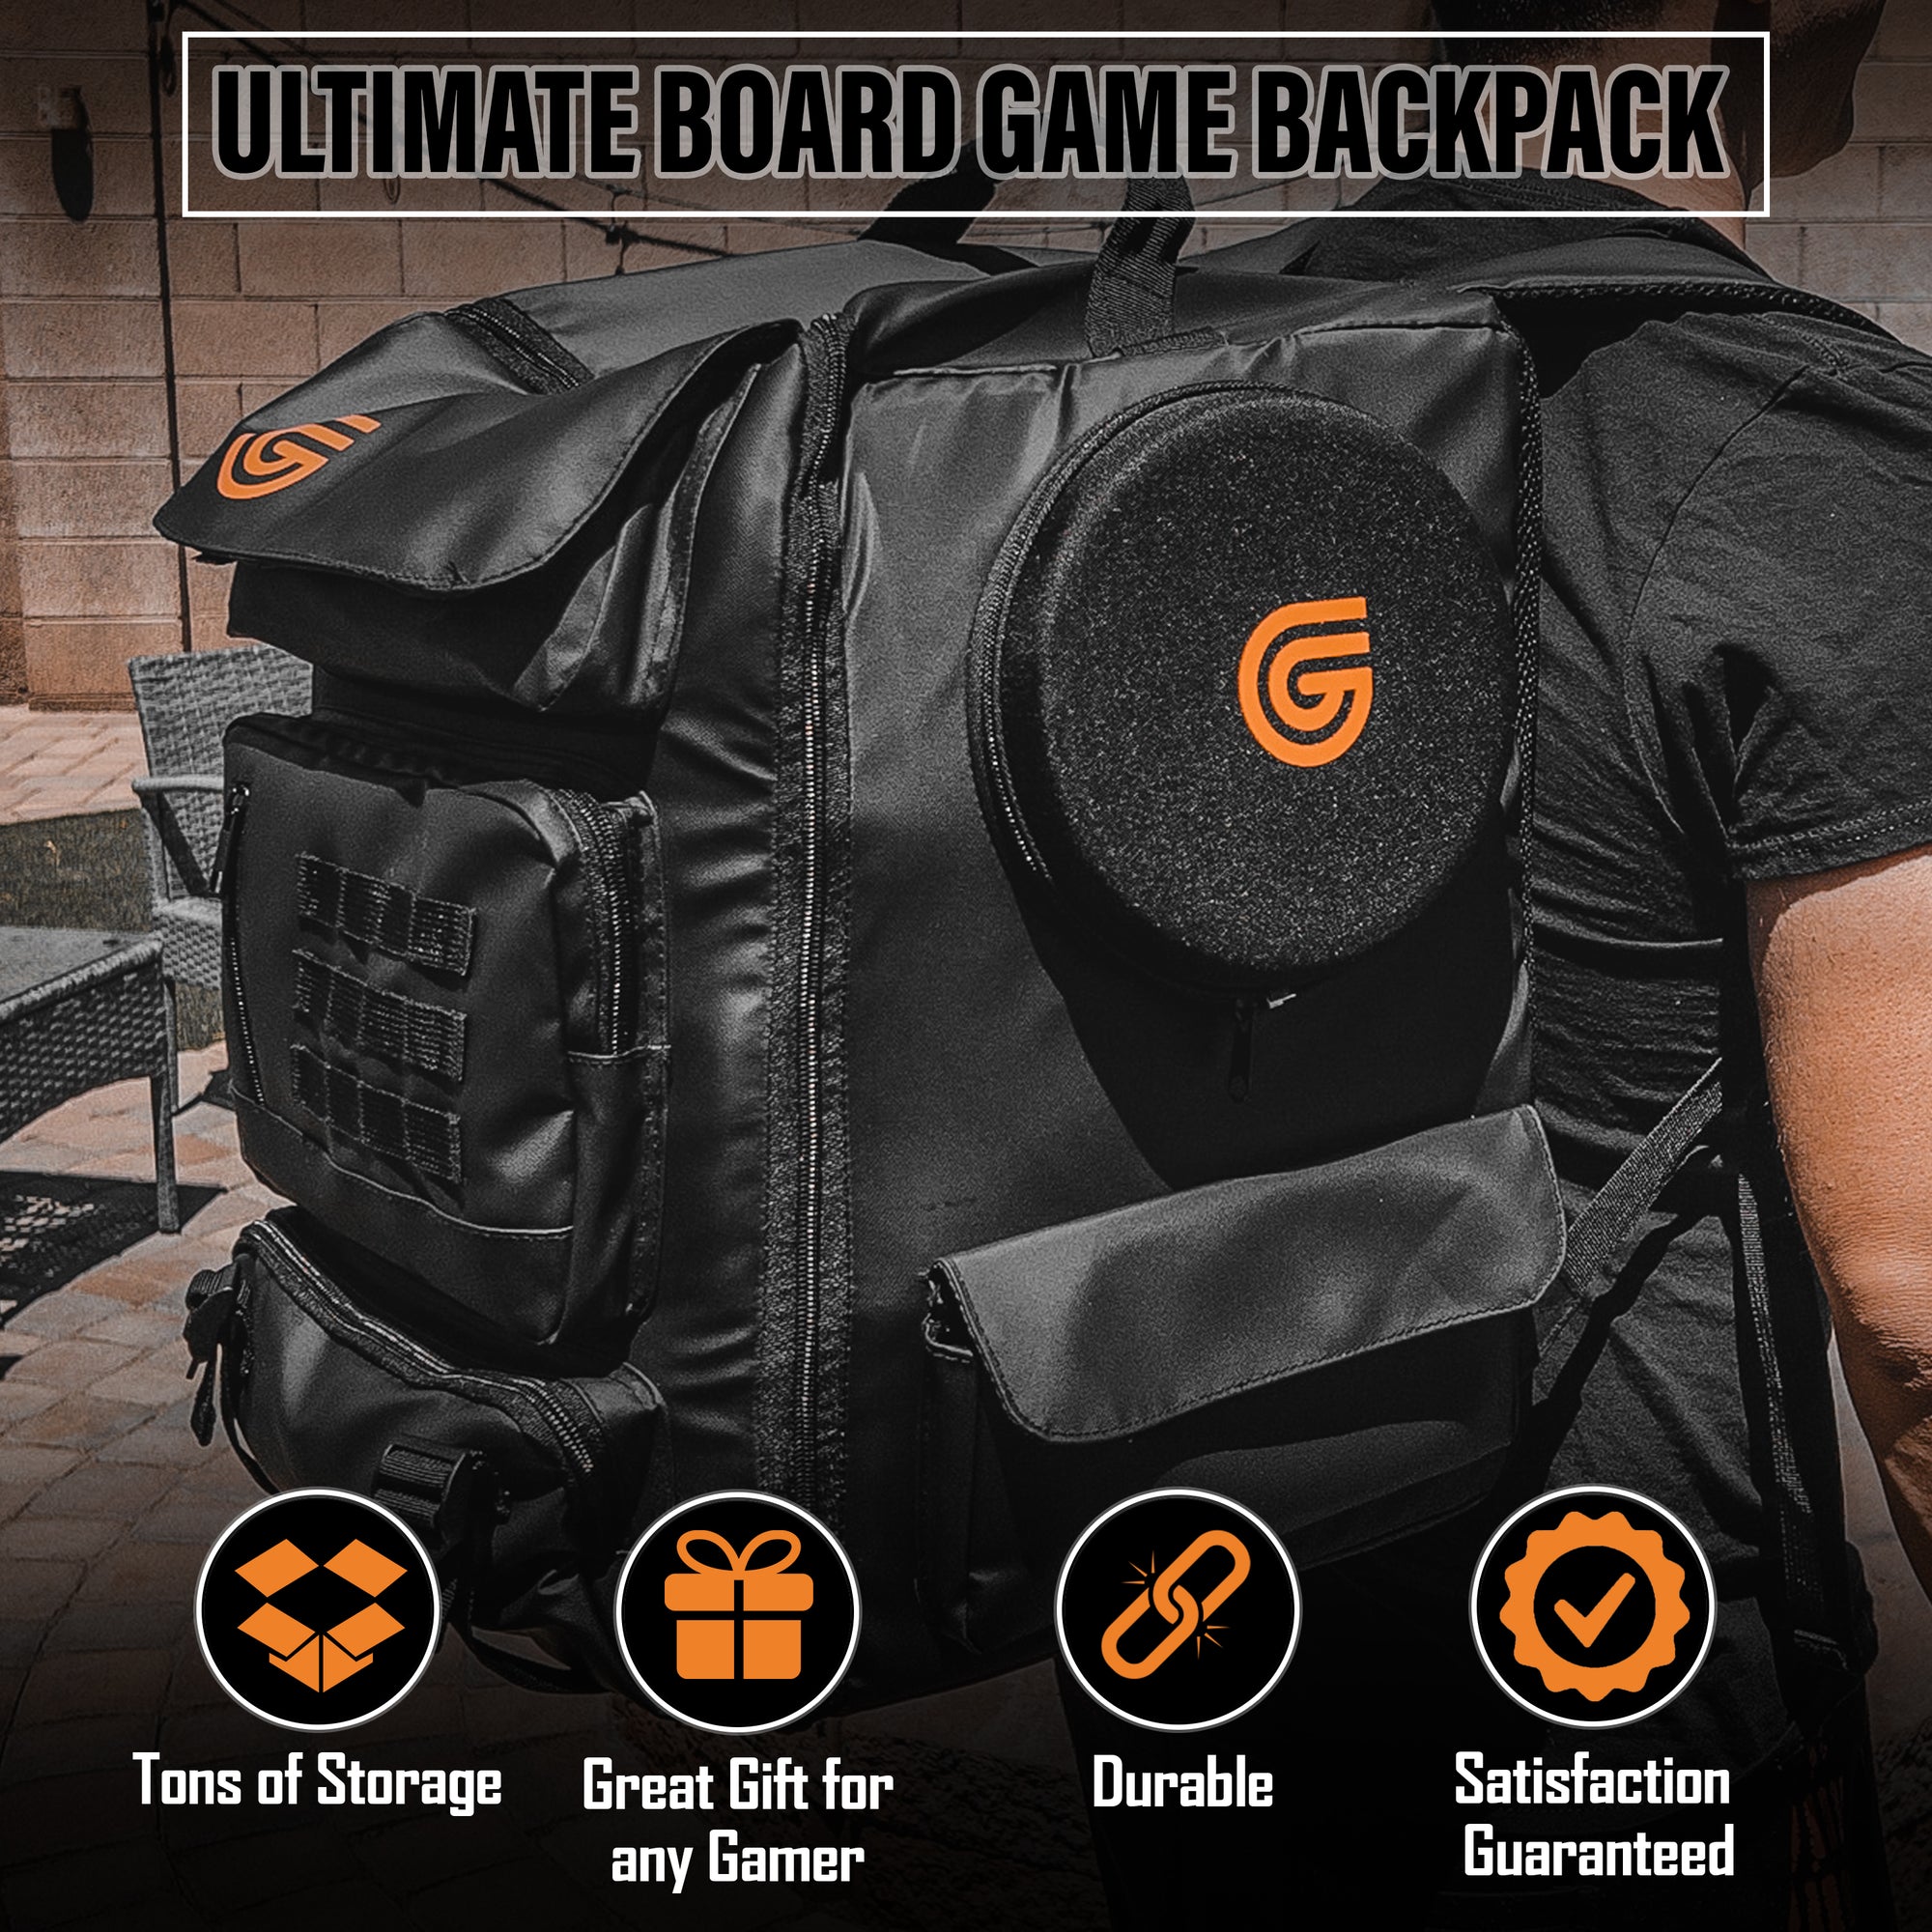 Ultimate Board Game Backpack